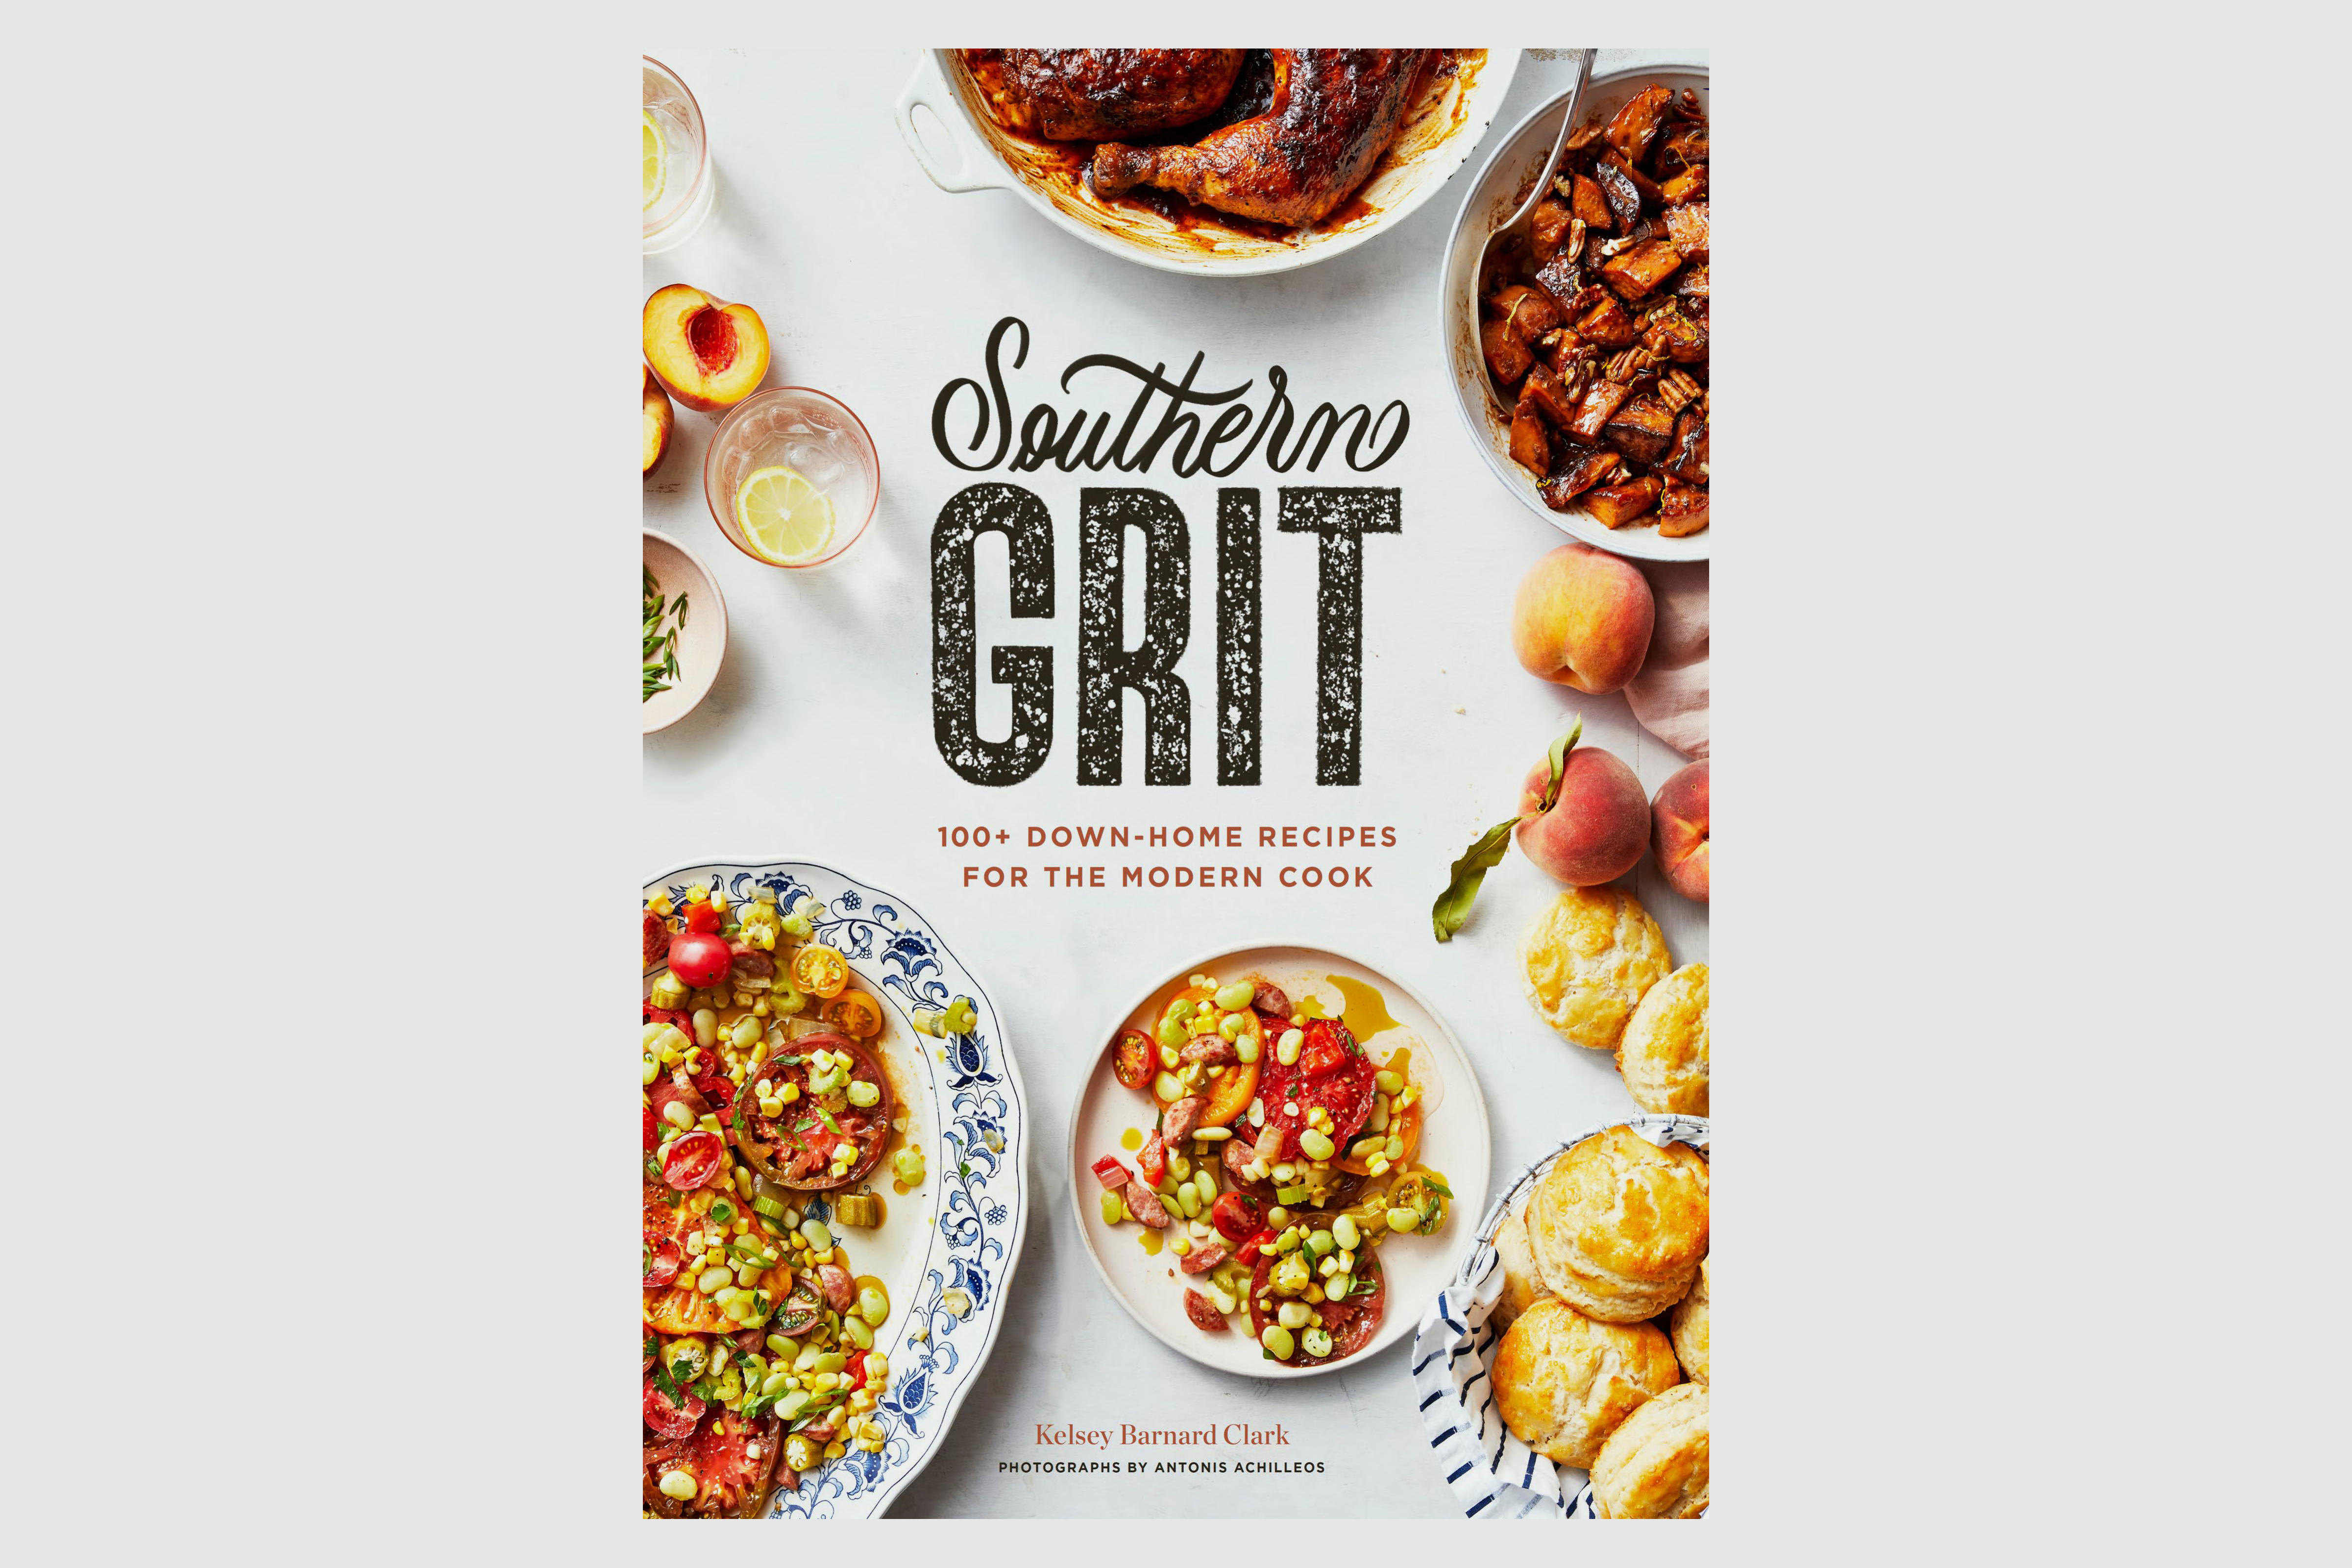 The cookbook "Southern Grit" by Kelsey Barnard Clark